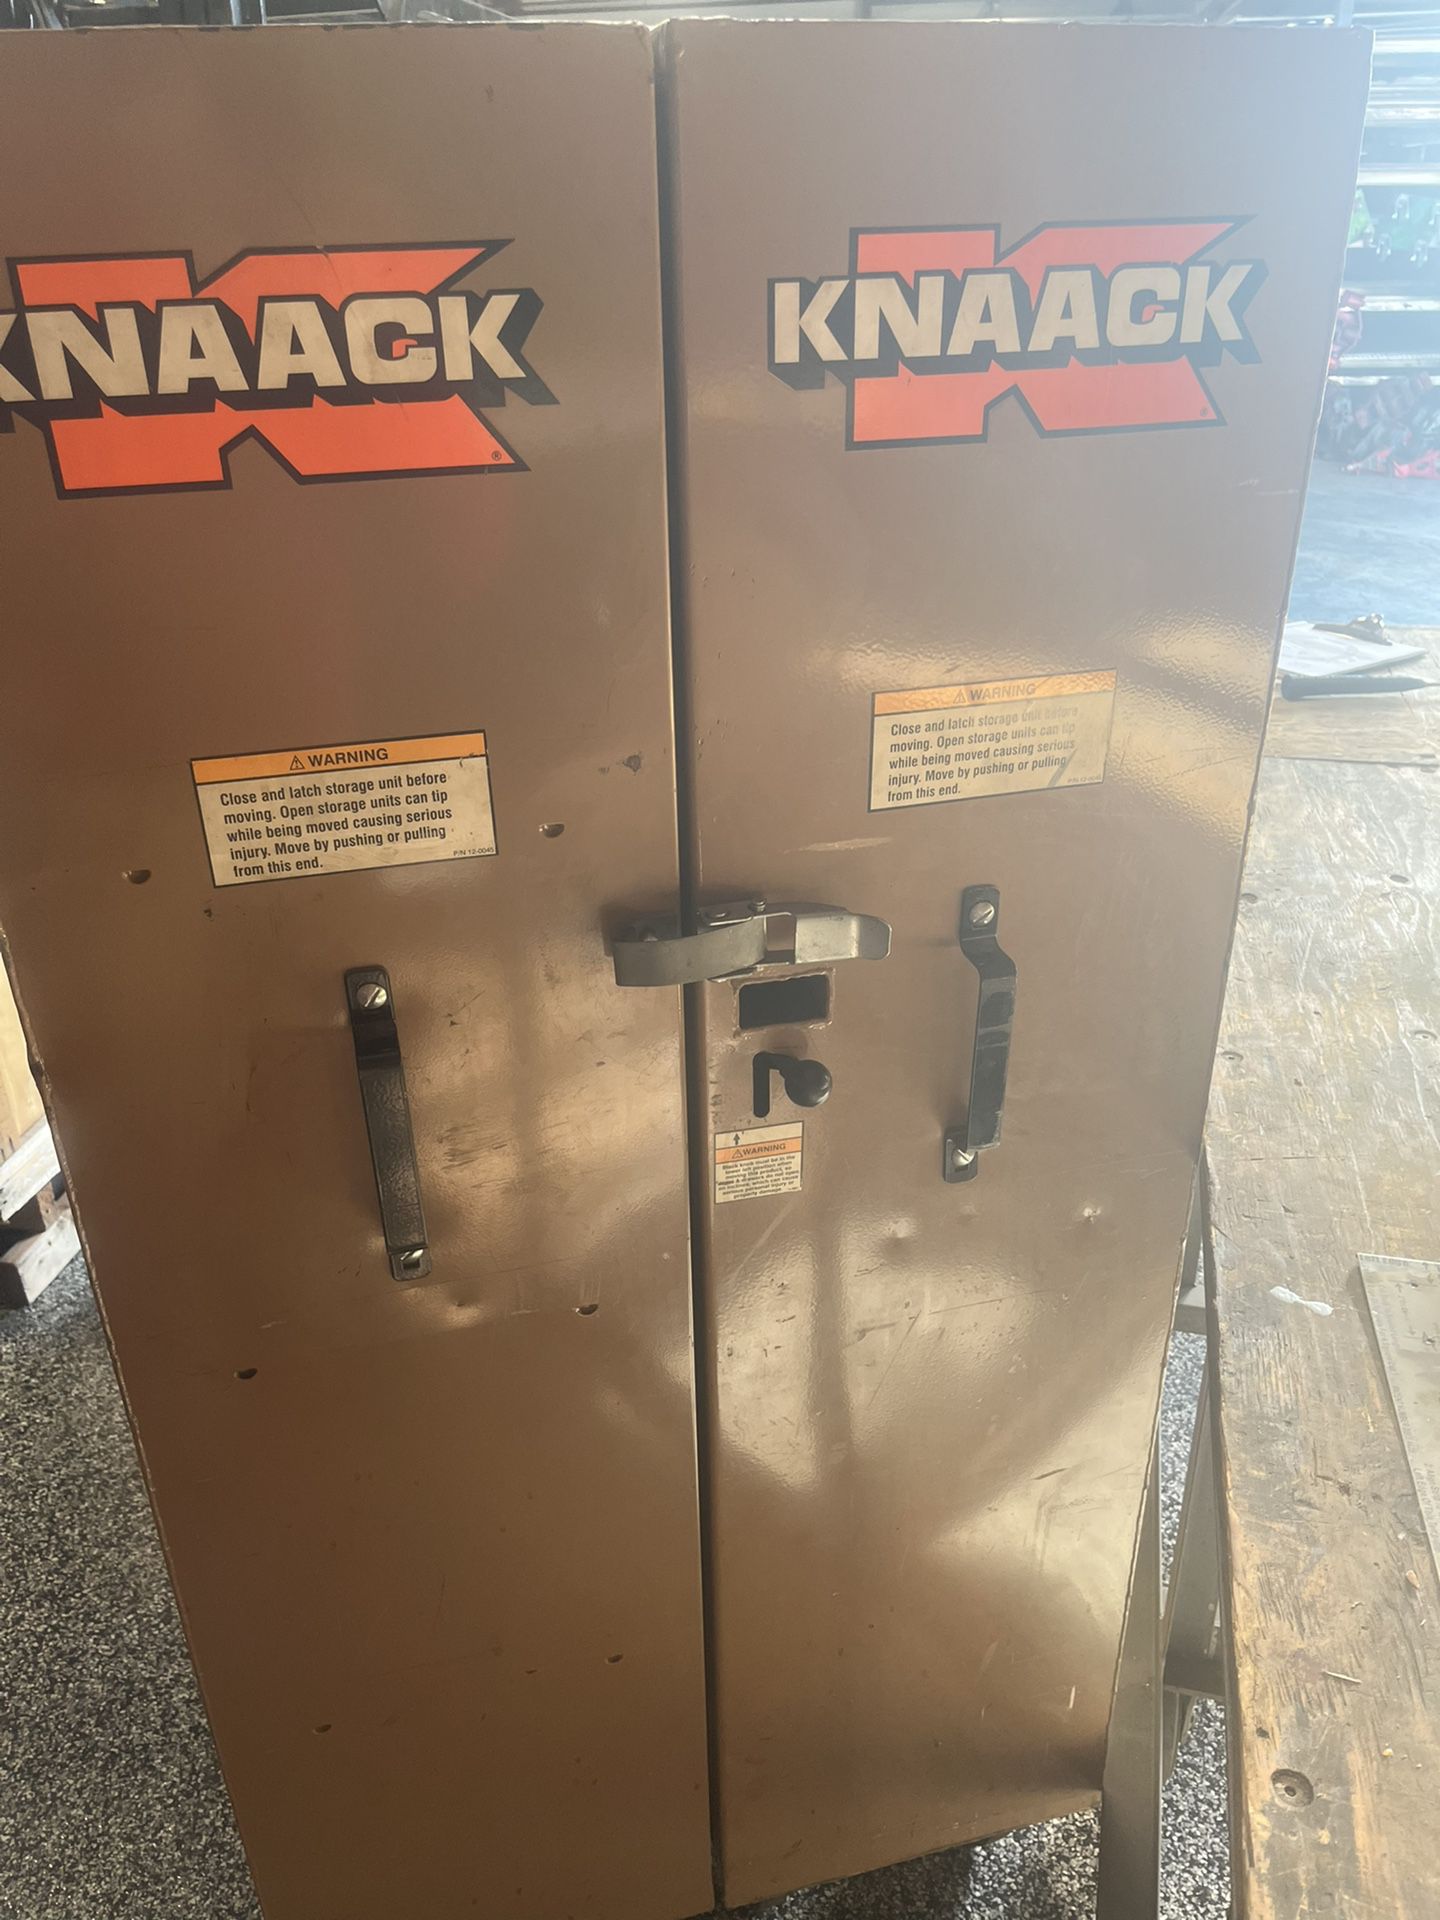 Knaack Tool Box